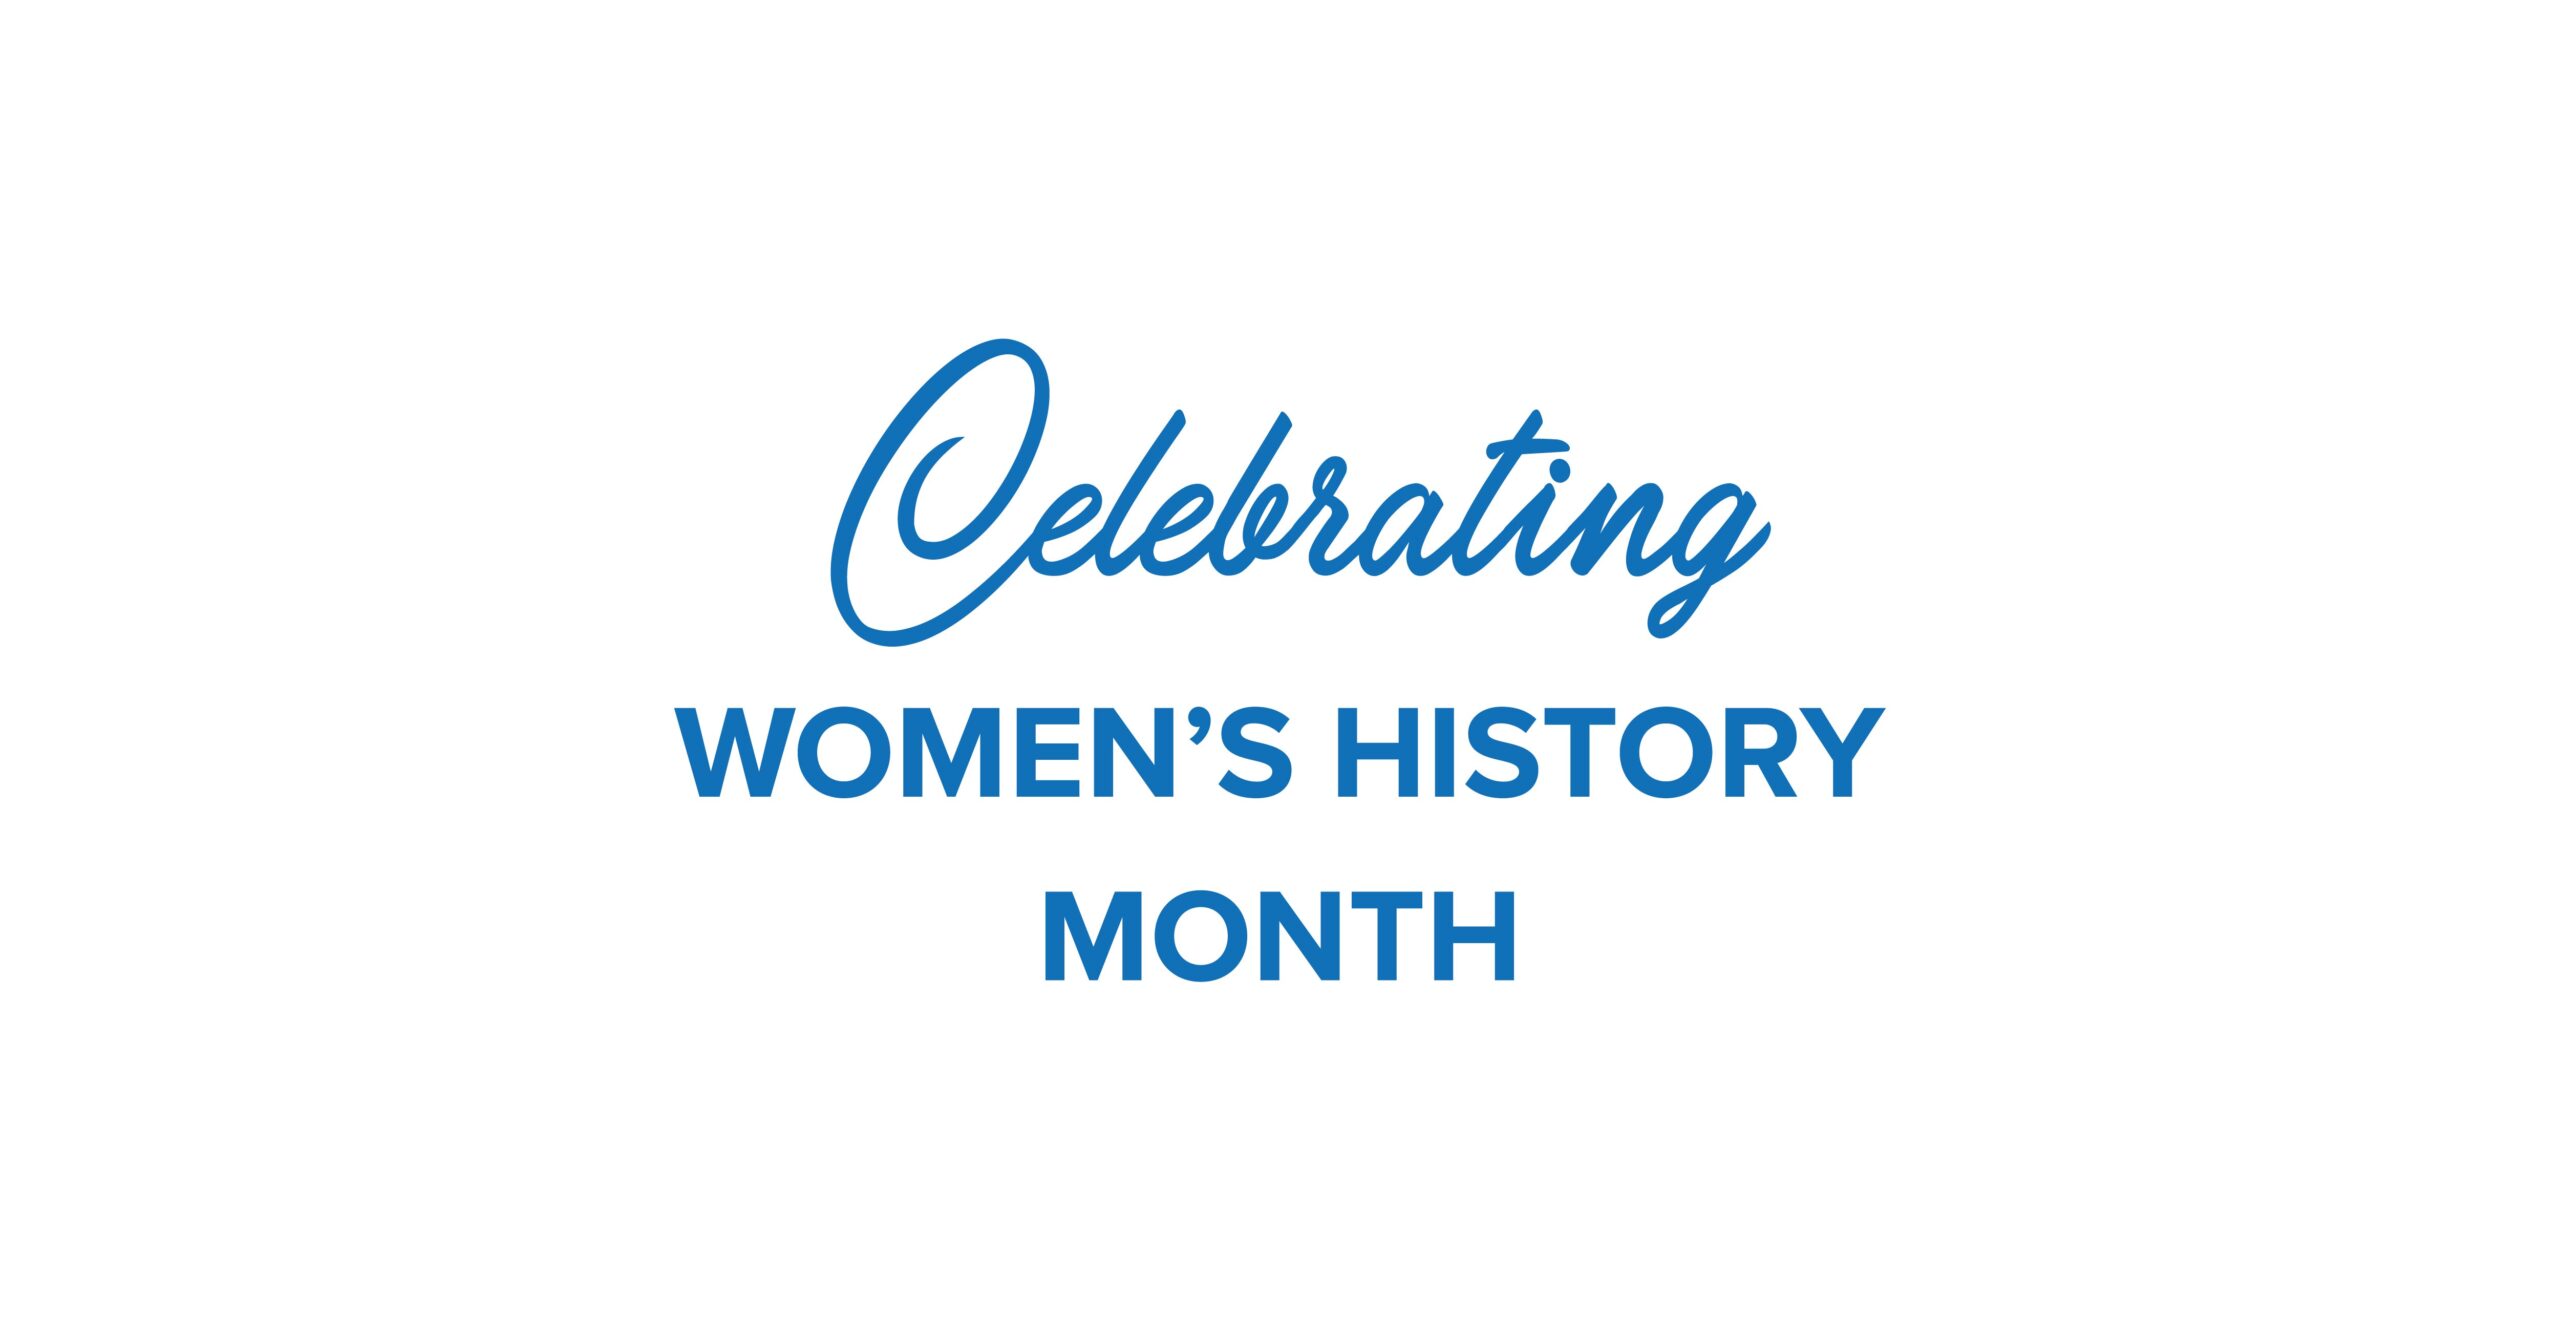 Women’s History Month